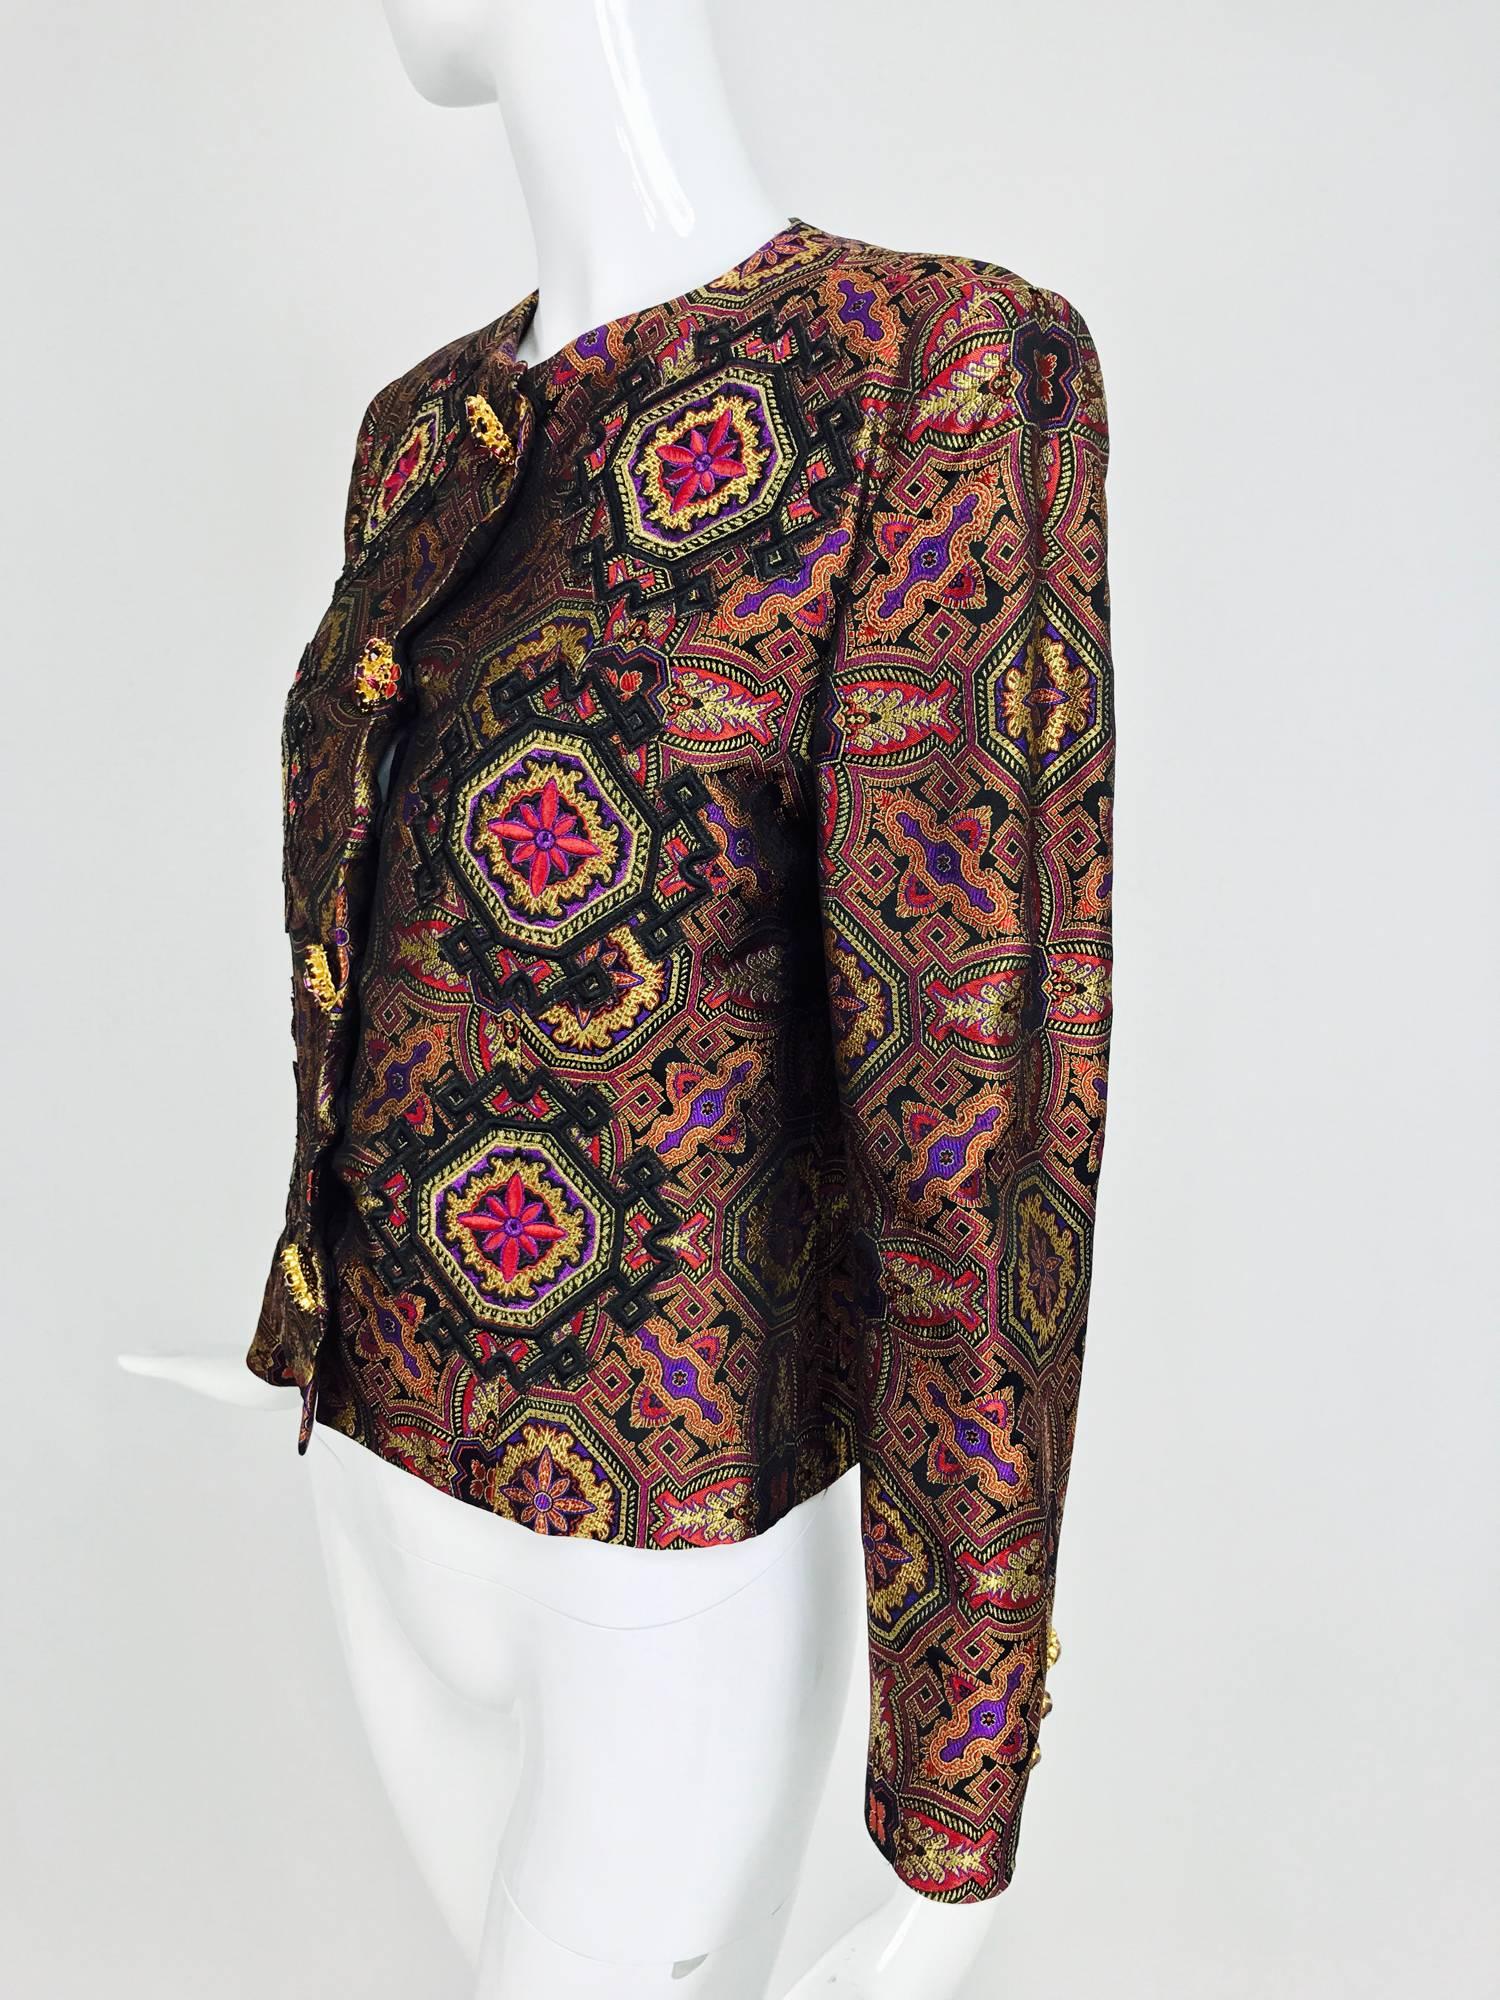 Vintage Christian LaCroix jewel tone brocade jacket jewel buttons 1980s 2